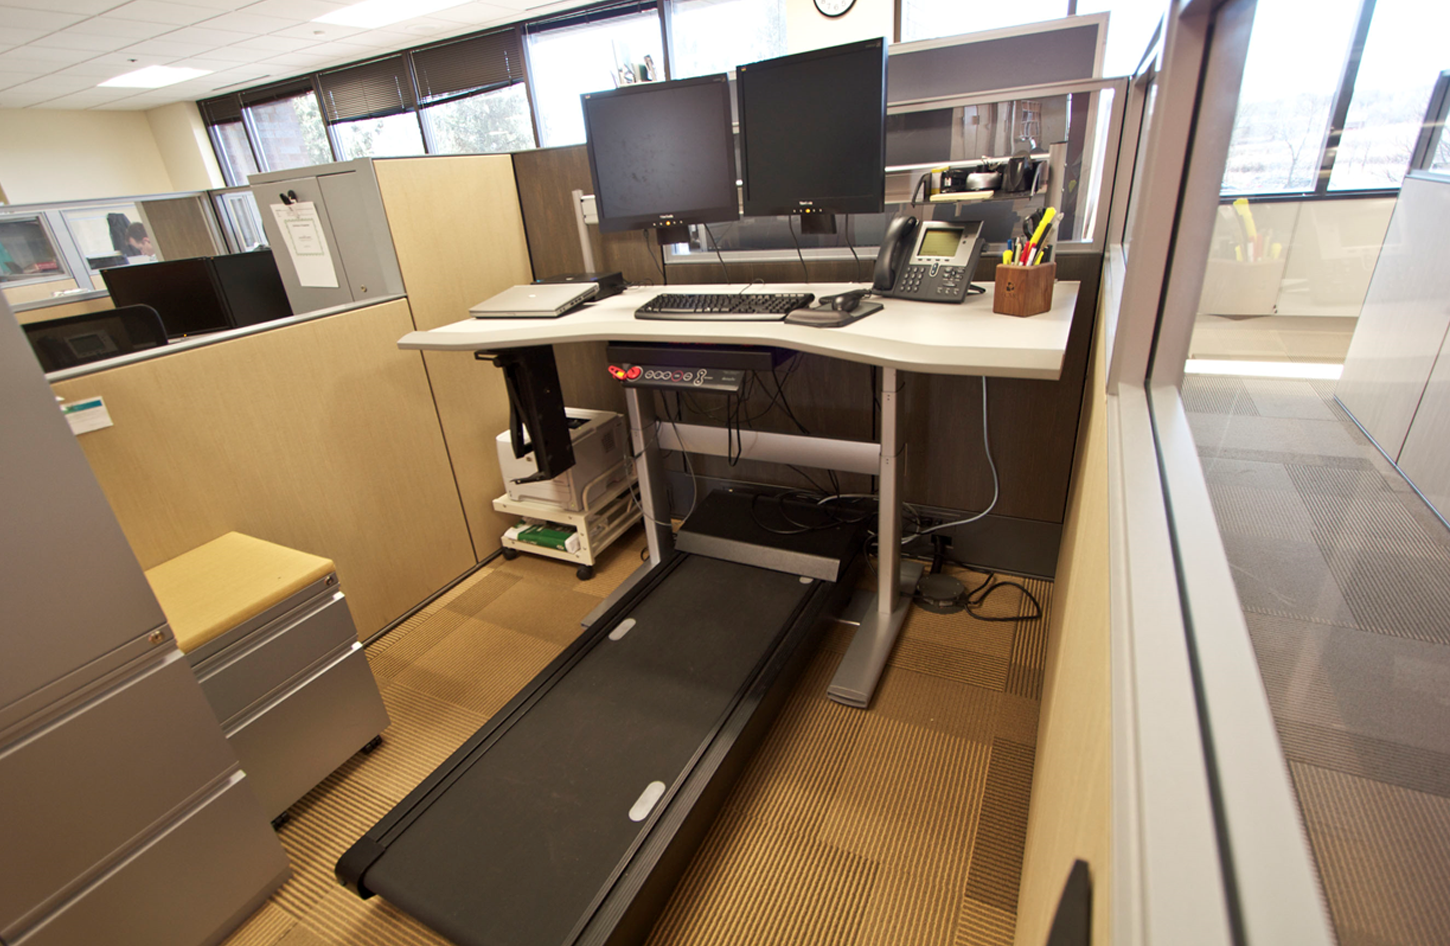 Treadmill Workstation Benefits Employees Employers Study Says